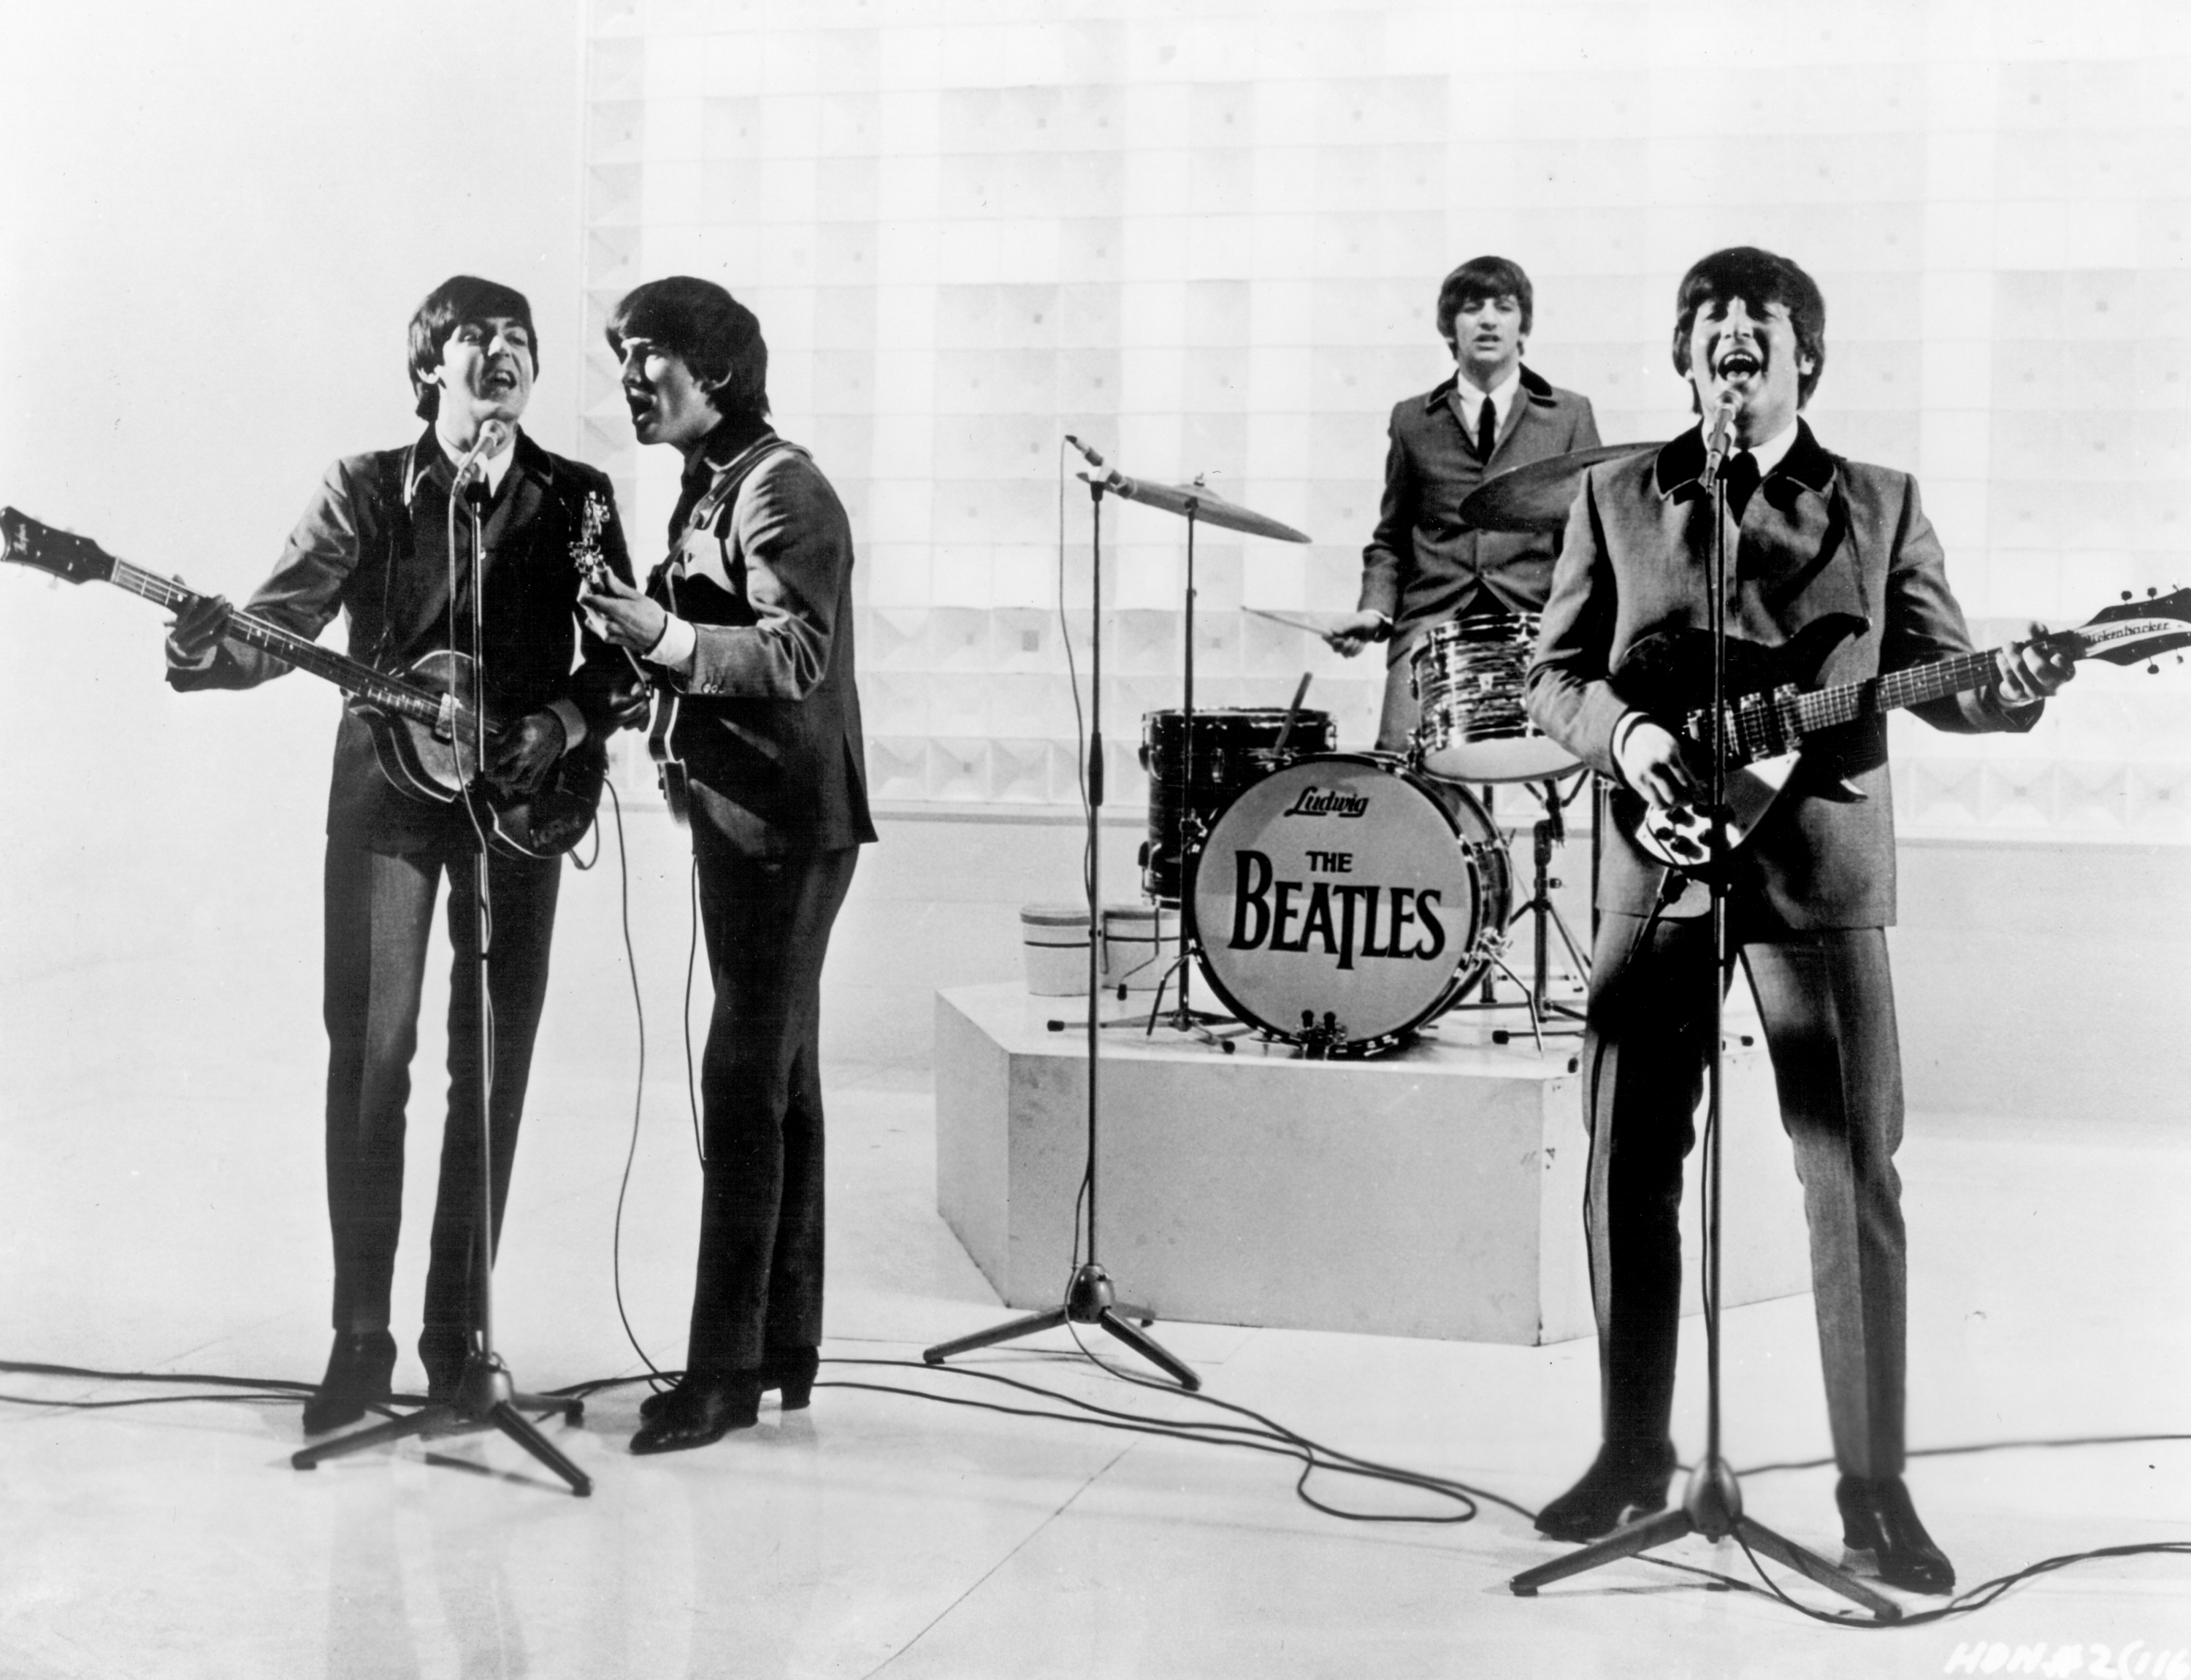 The Beatles' Paul McCartney, George Harrison, Ringo Starr, and John Lennon wearing suits